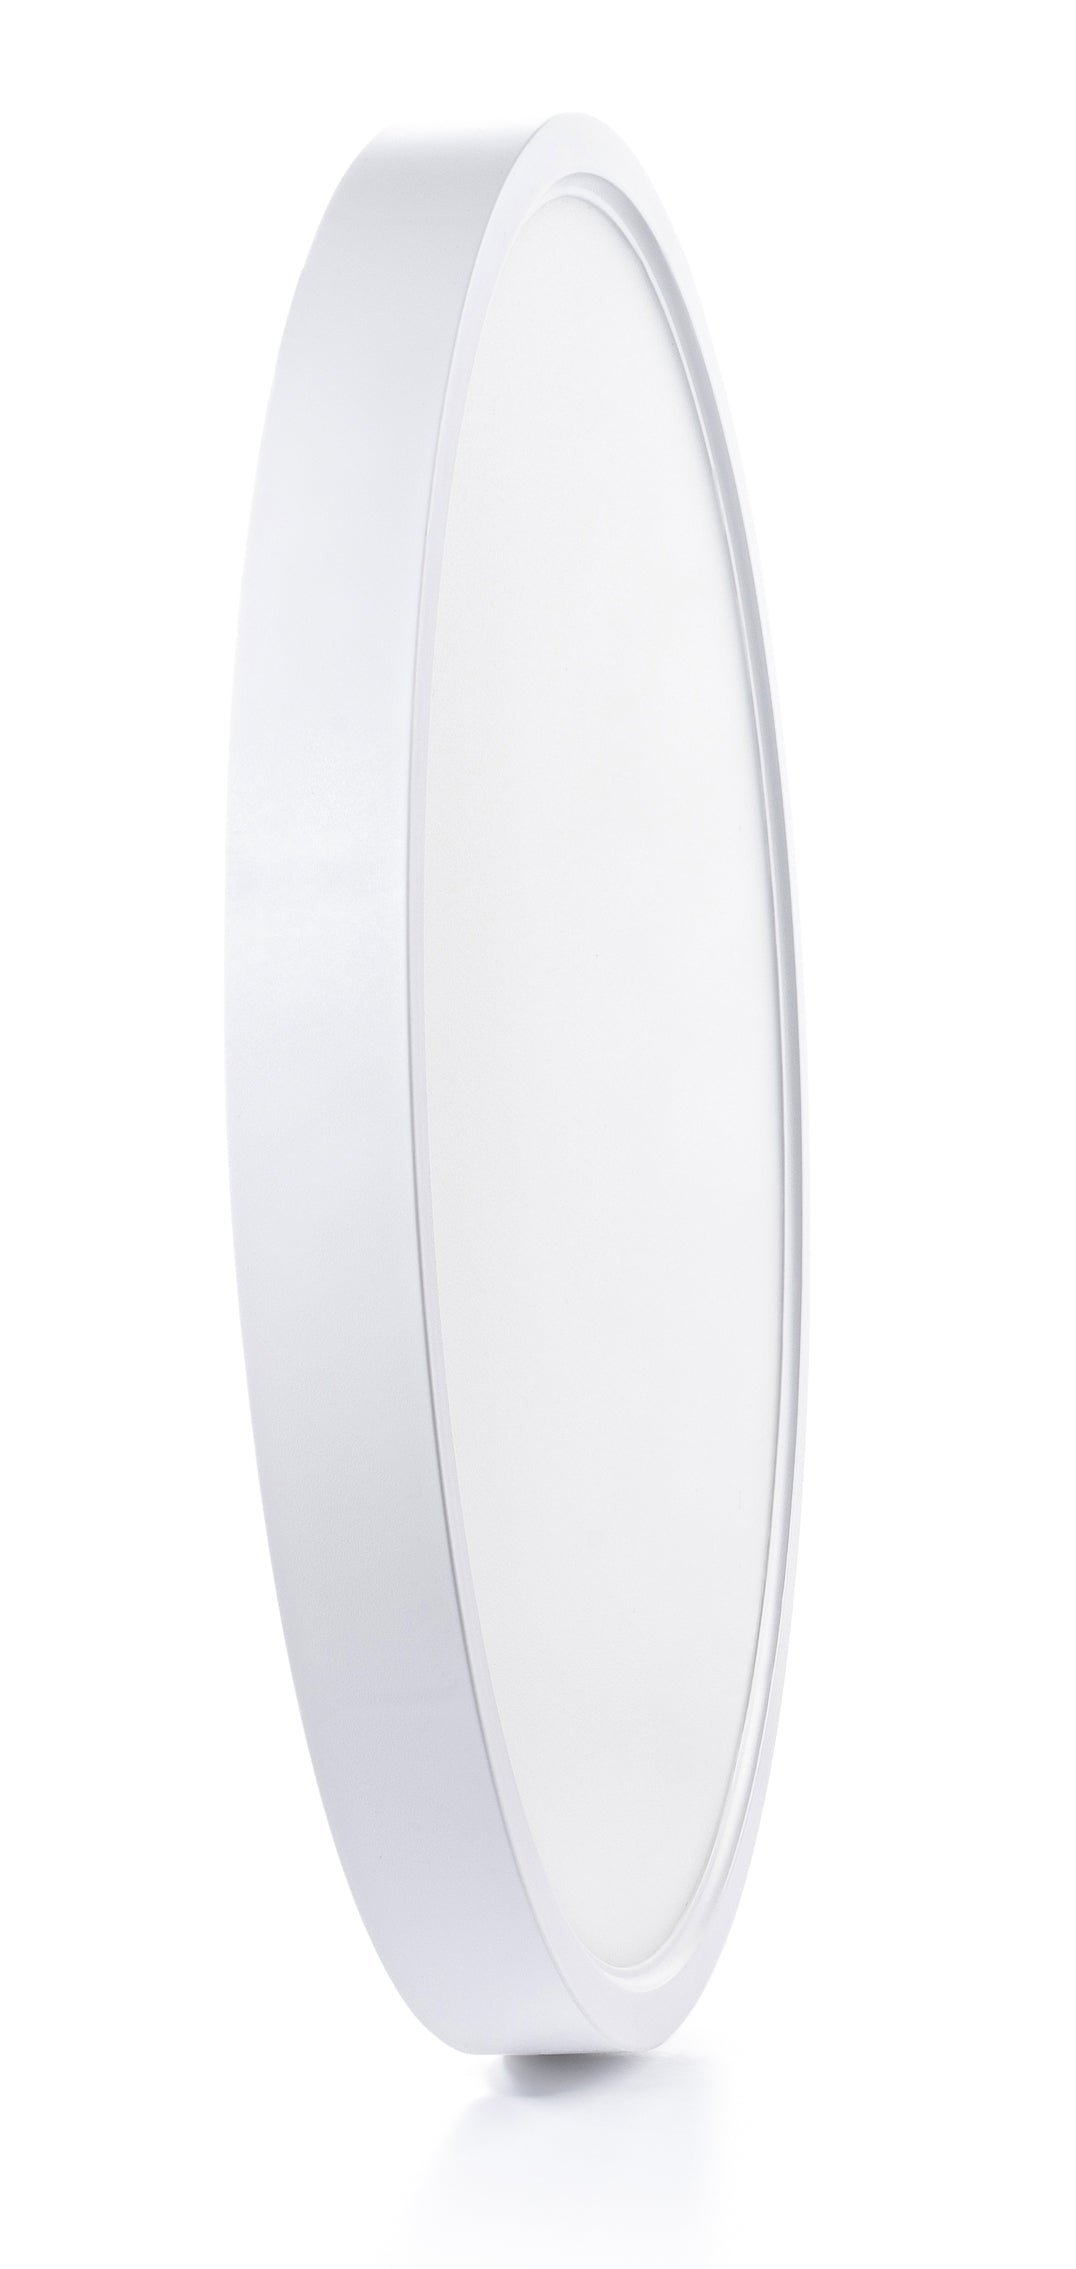 BODLED Flush Mounted Ceiling Light LED – Minimalistic Smart Dimmable LED Ceiling Light – Color Changing LED Ceiling Light with 3 Color Tones – Triac Dimming Adjustable LED Ceiling Light – 12”